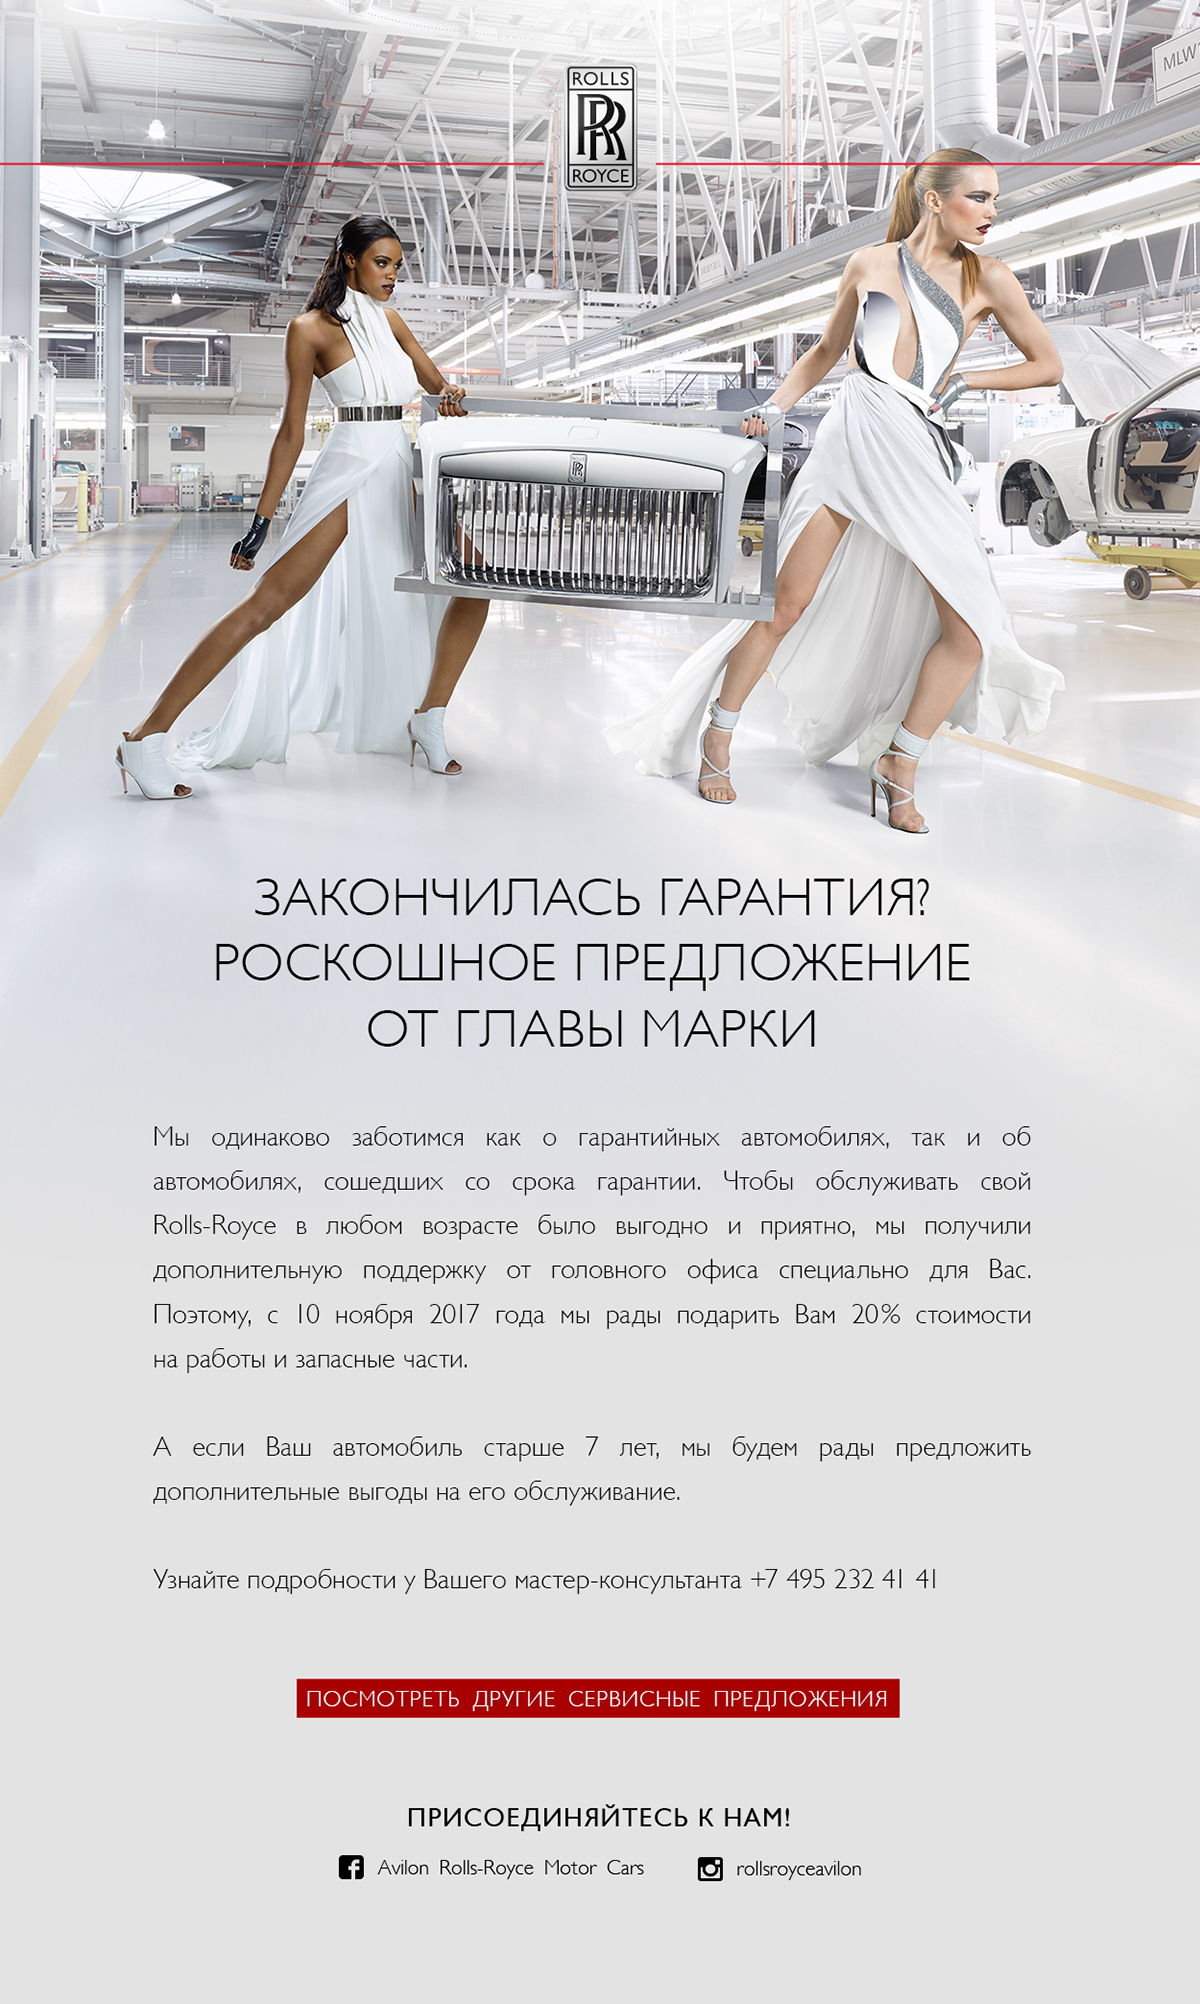 Rolls-Royce service newsletter avilon automotive   luxury